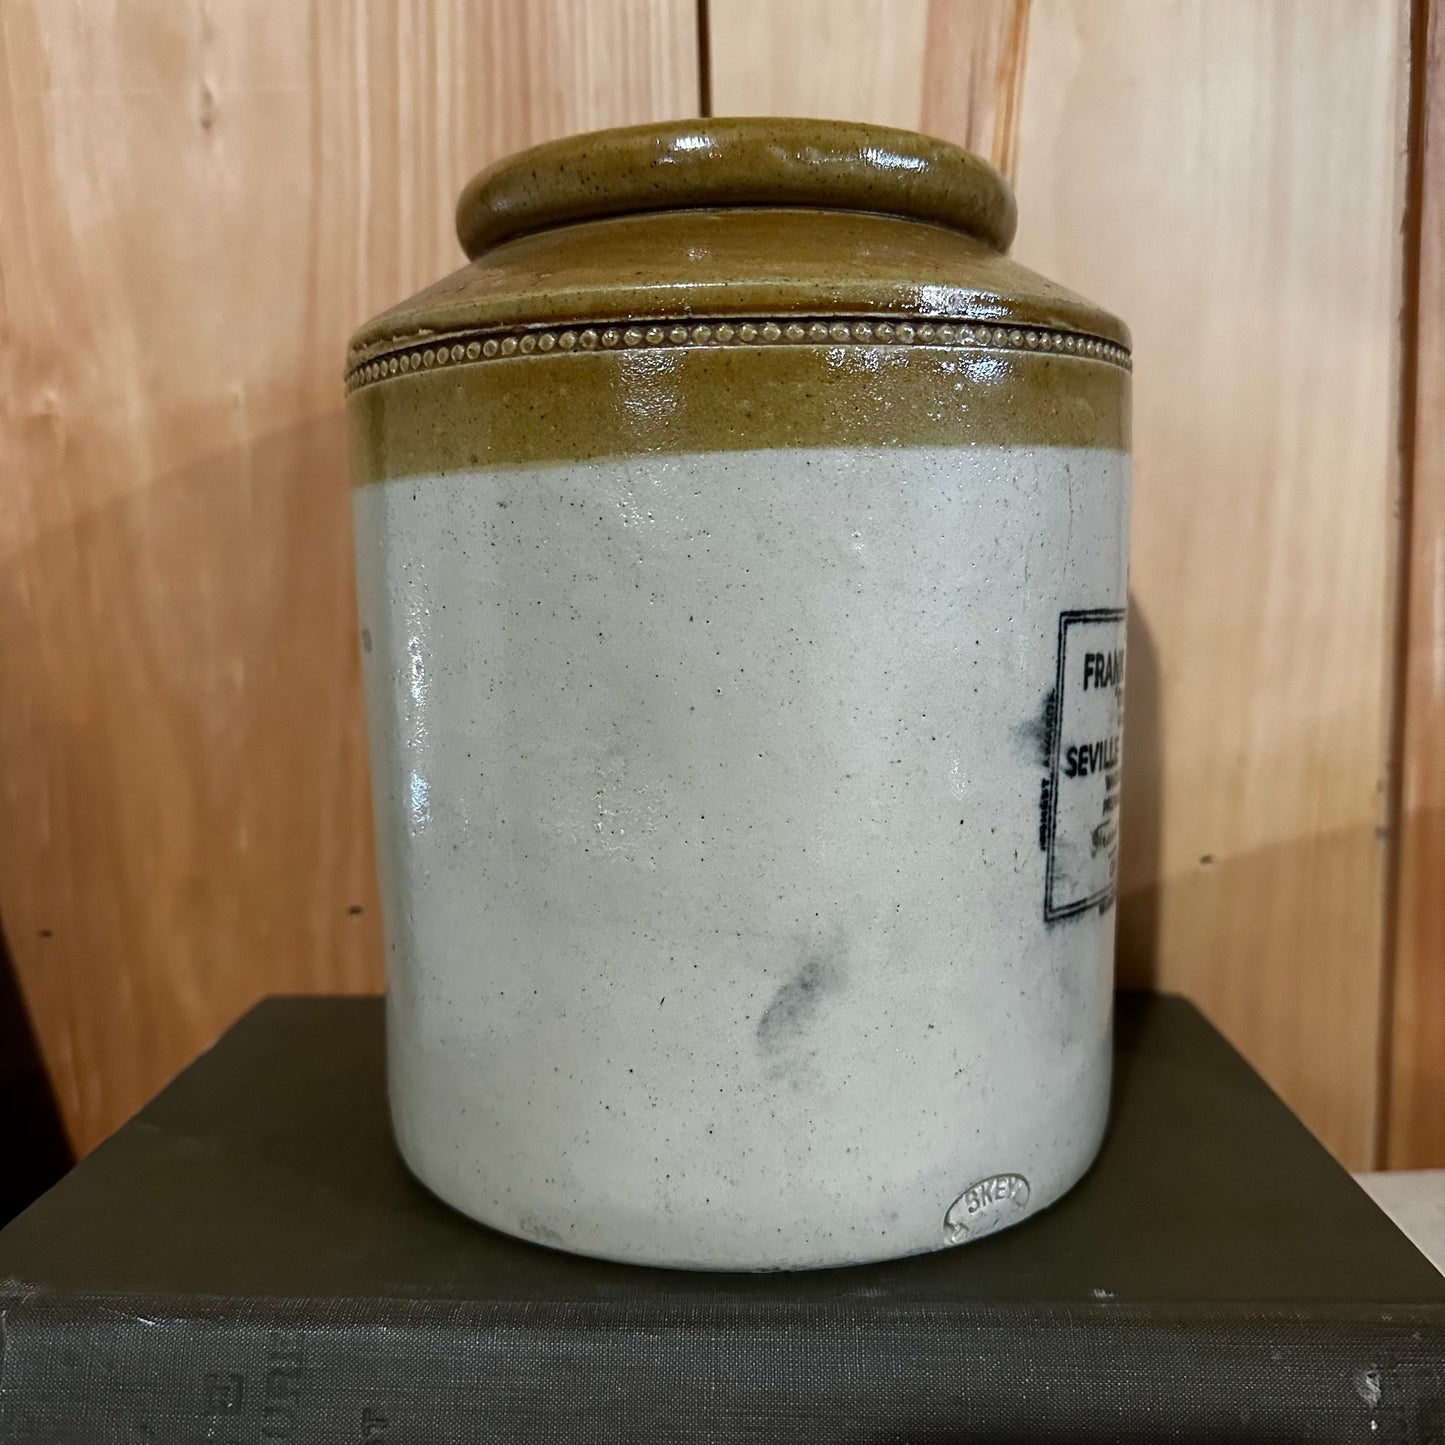 Antique Frank Cooper Rare 5 Pound Brown Top Jar Pot Crock Marmalade English Advertising